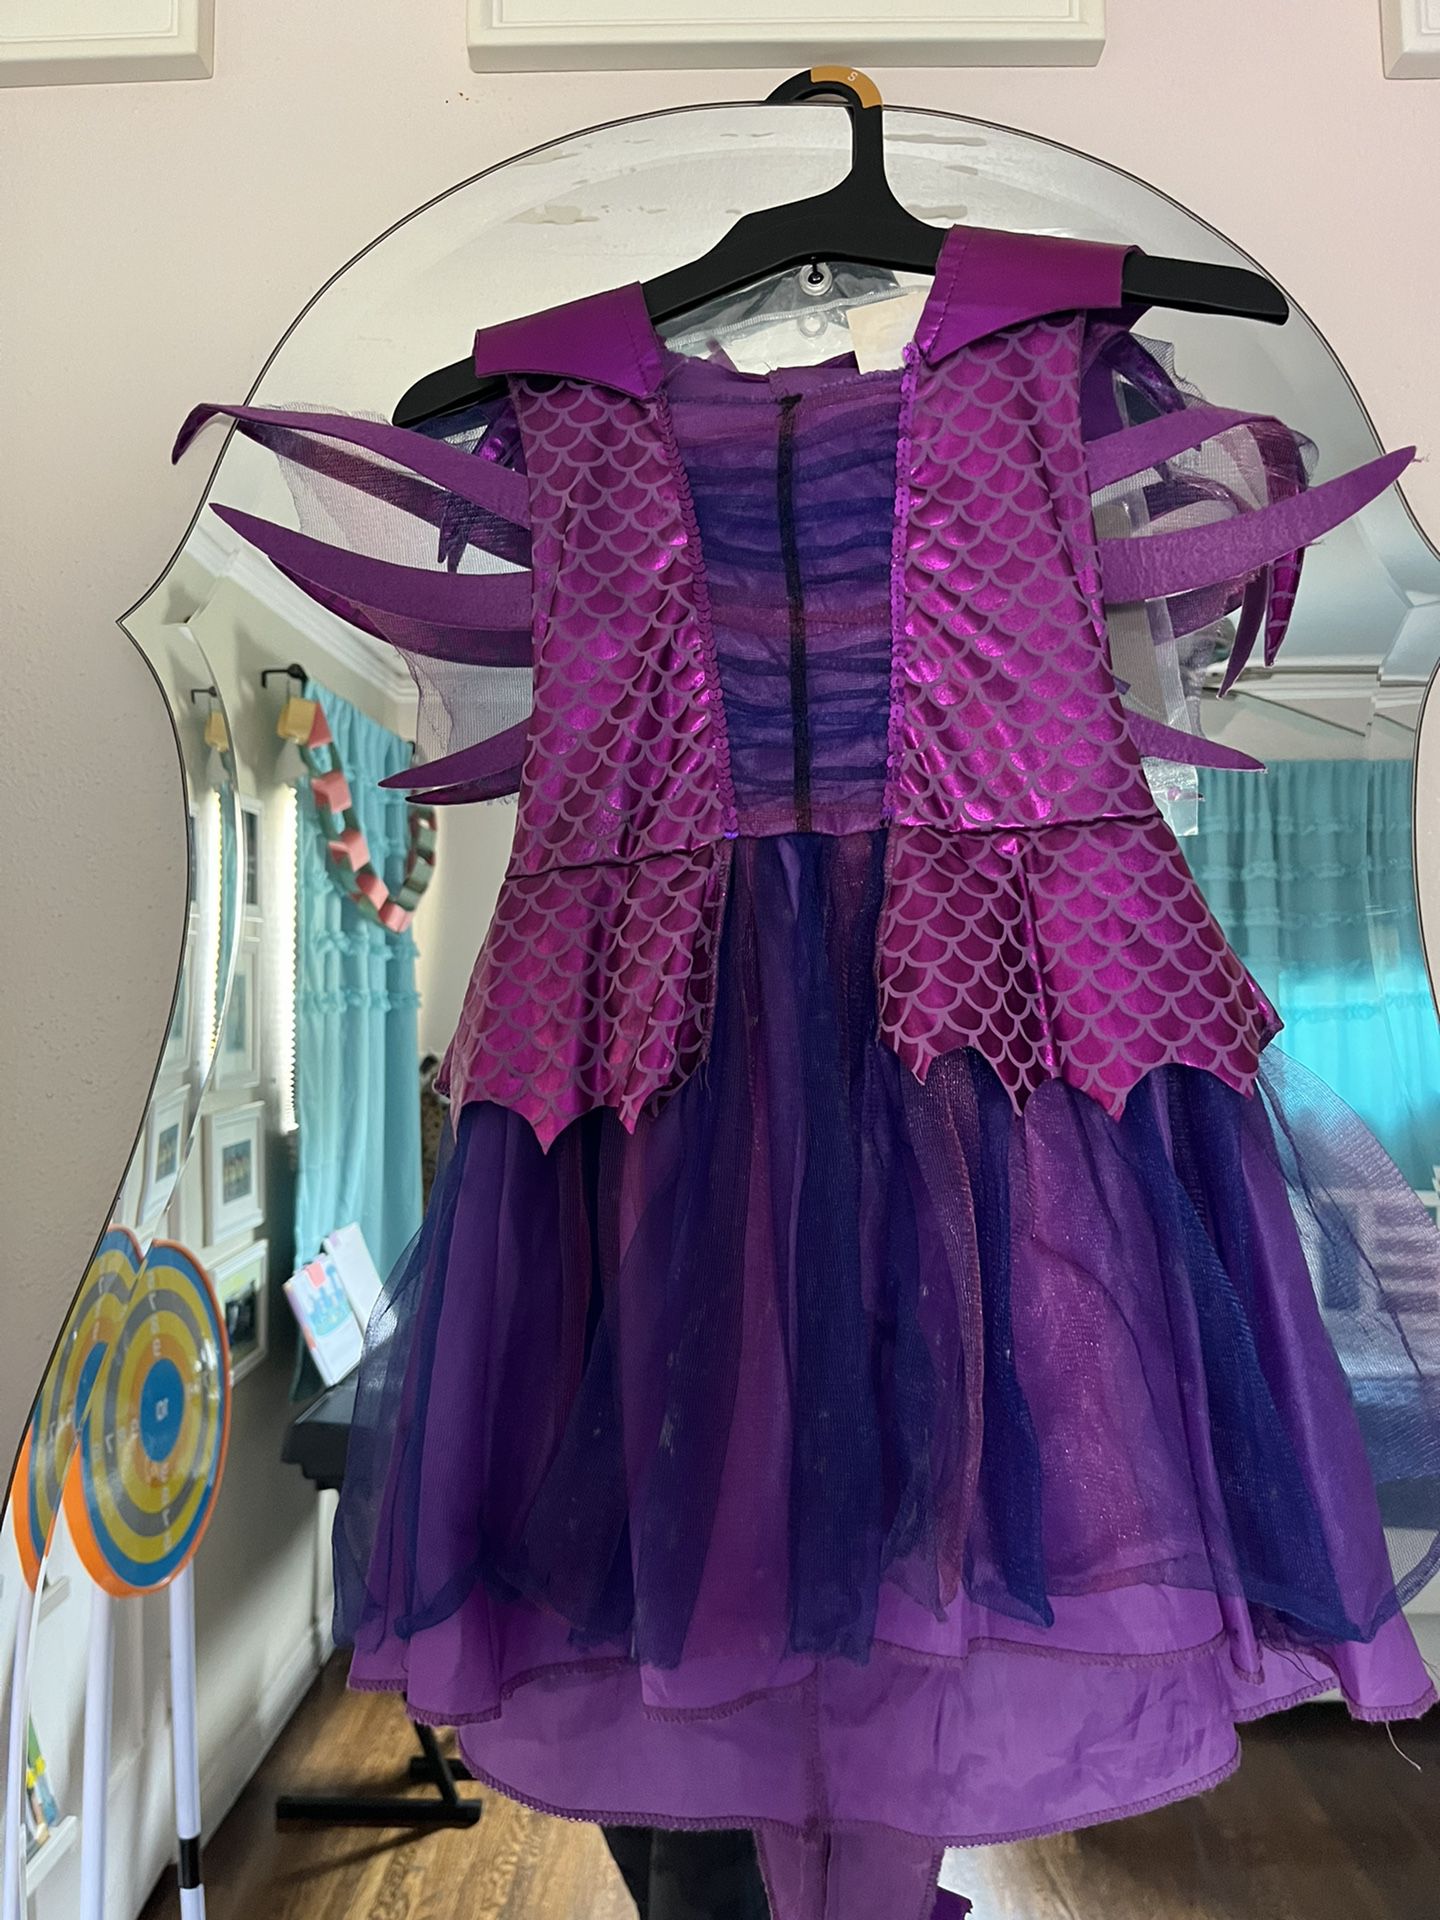 Dragon Costume - Girls - Purple , Fits 4-7 Year Old